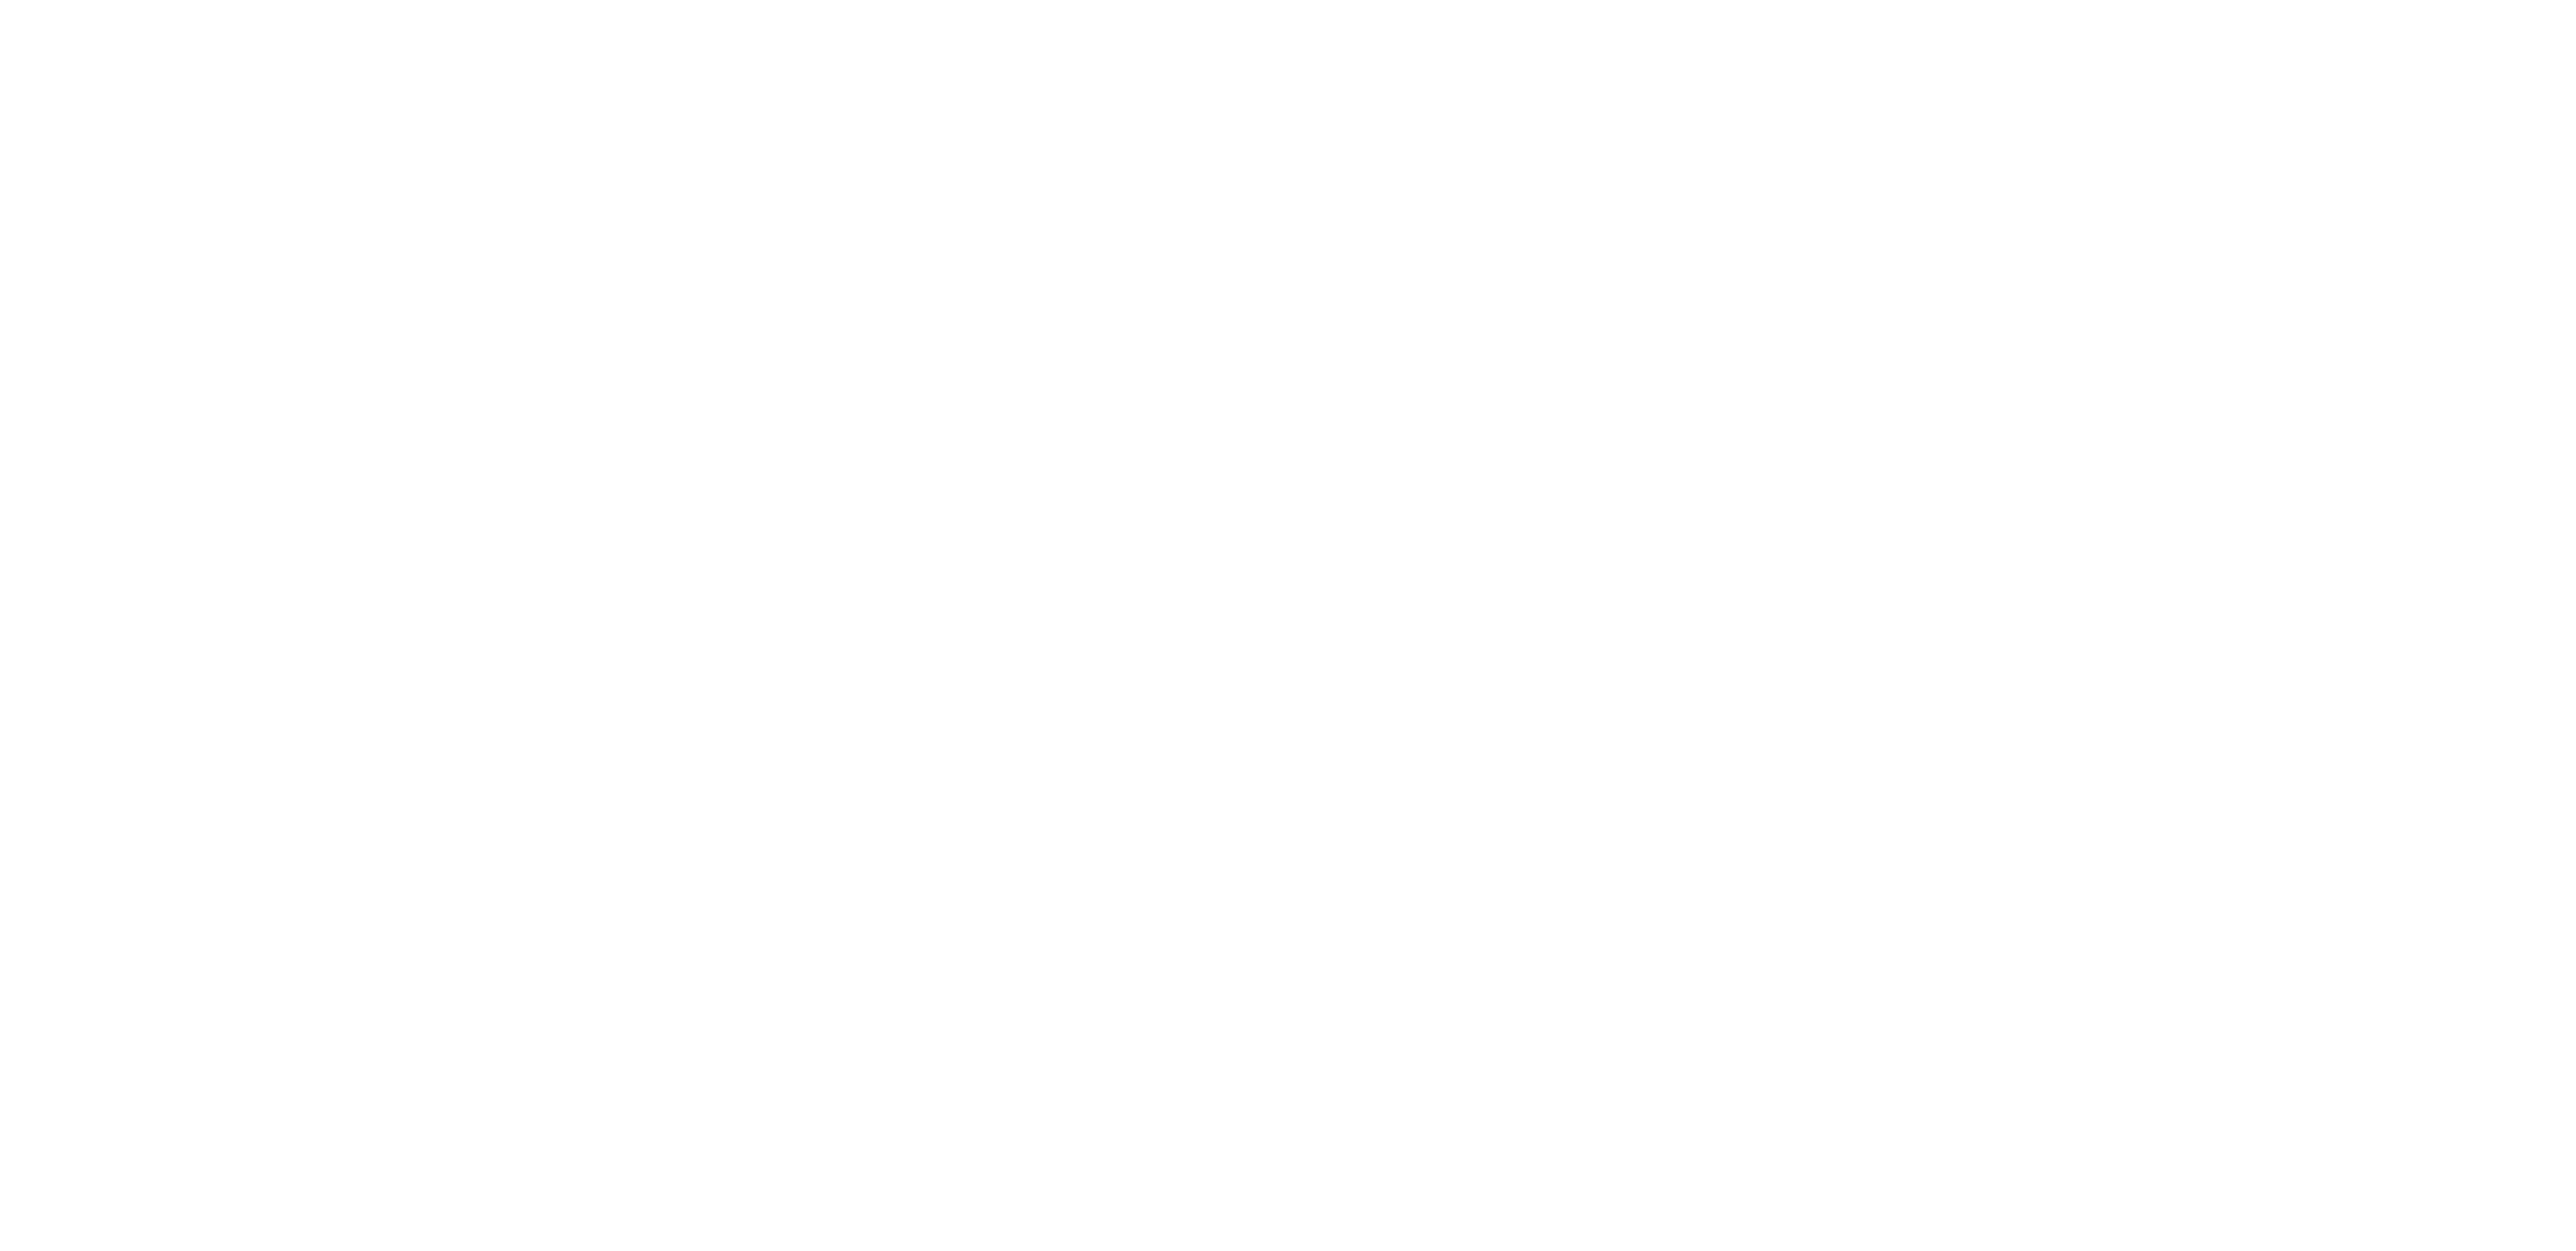 Texas Department of Information Resources (DIR)